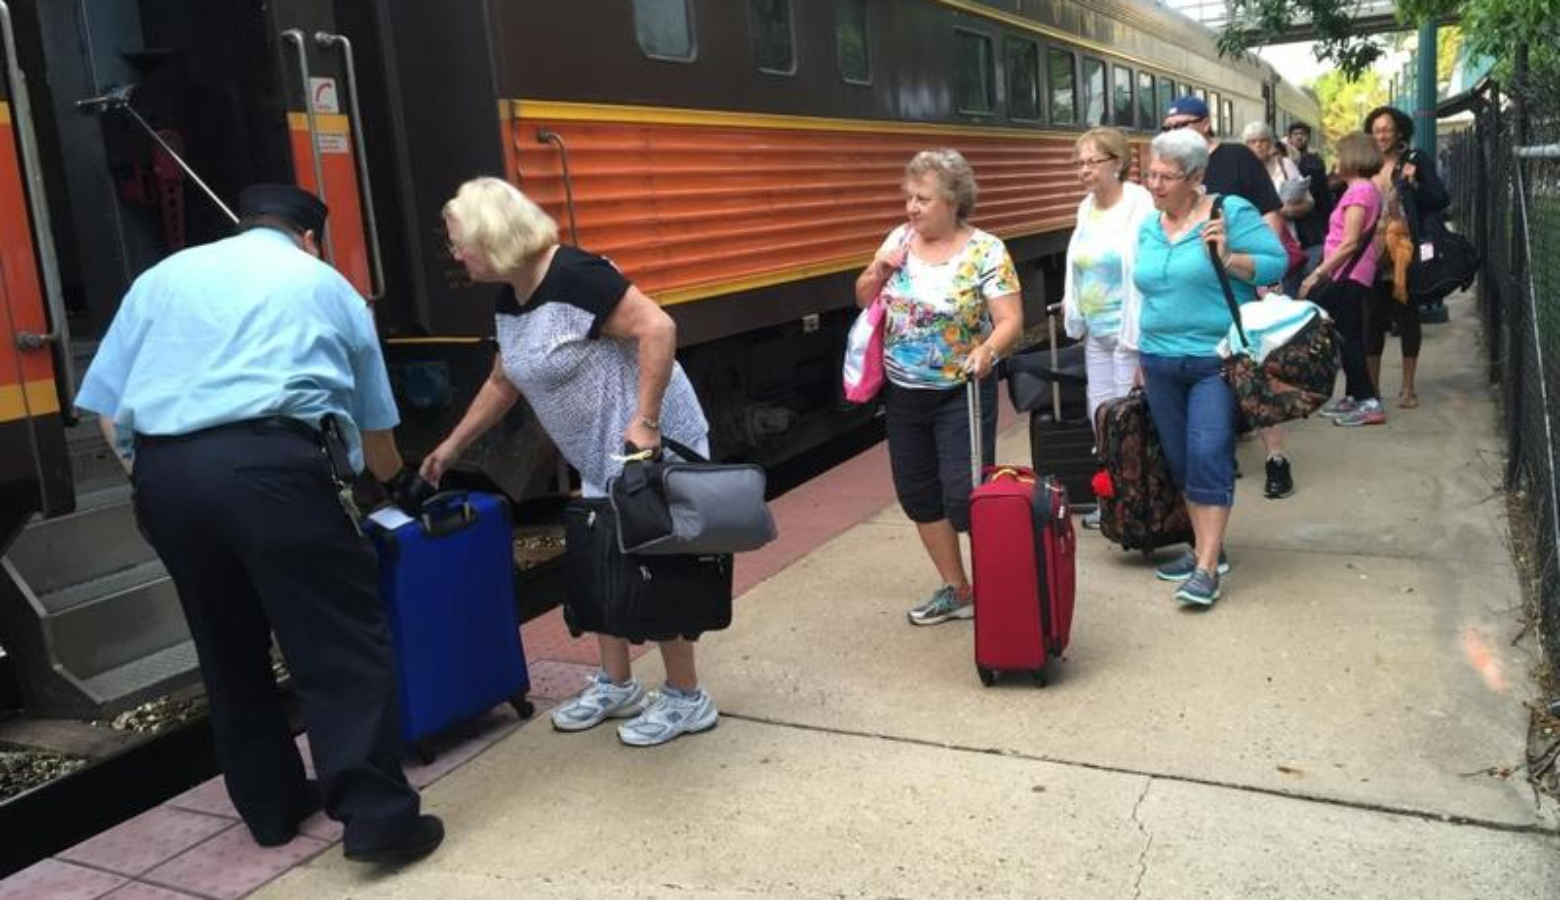 Passengers board the Hoosier State train Friday Aug. 19, 2016. (FILE PHOTO: Chris Morisse Vizza/WBAA)